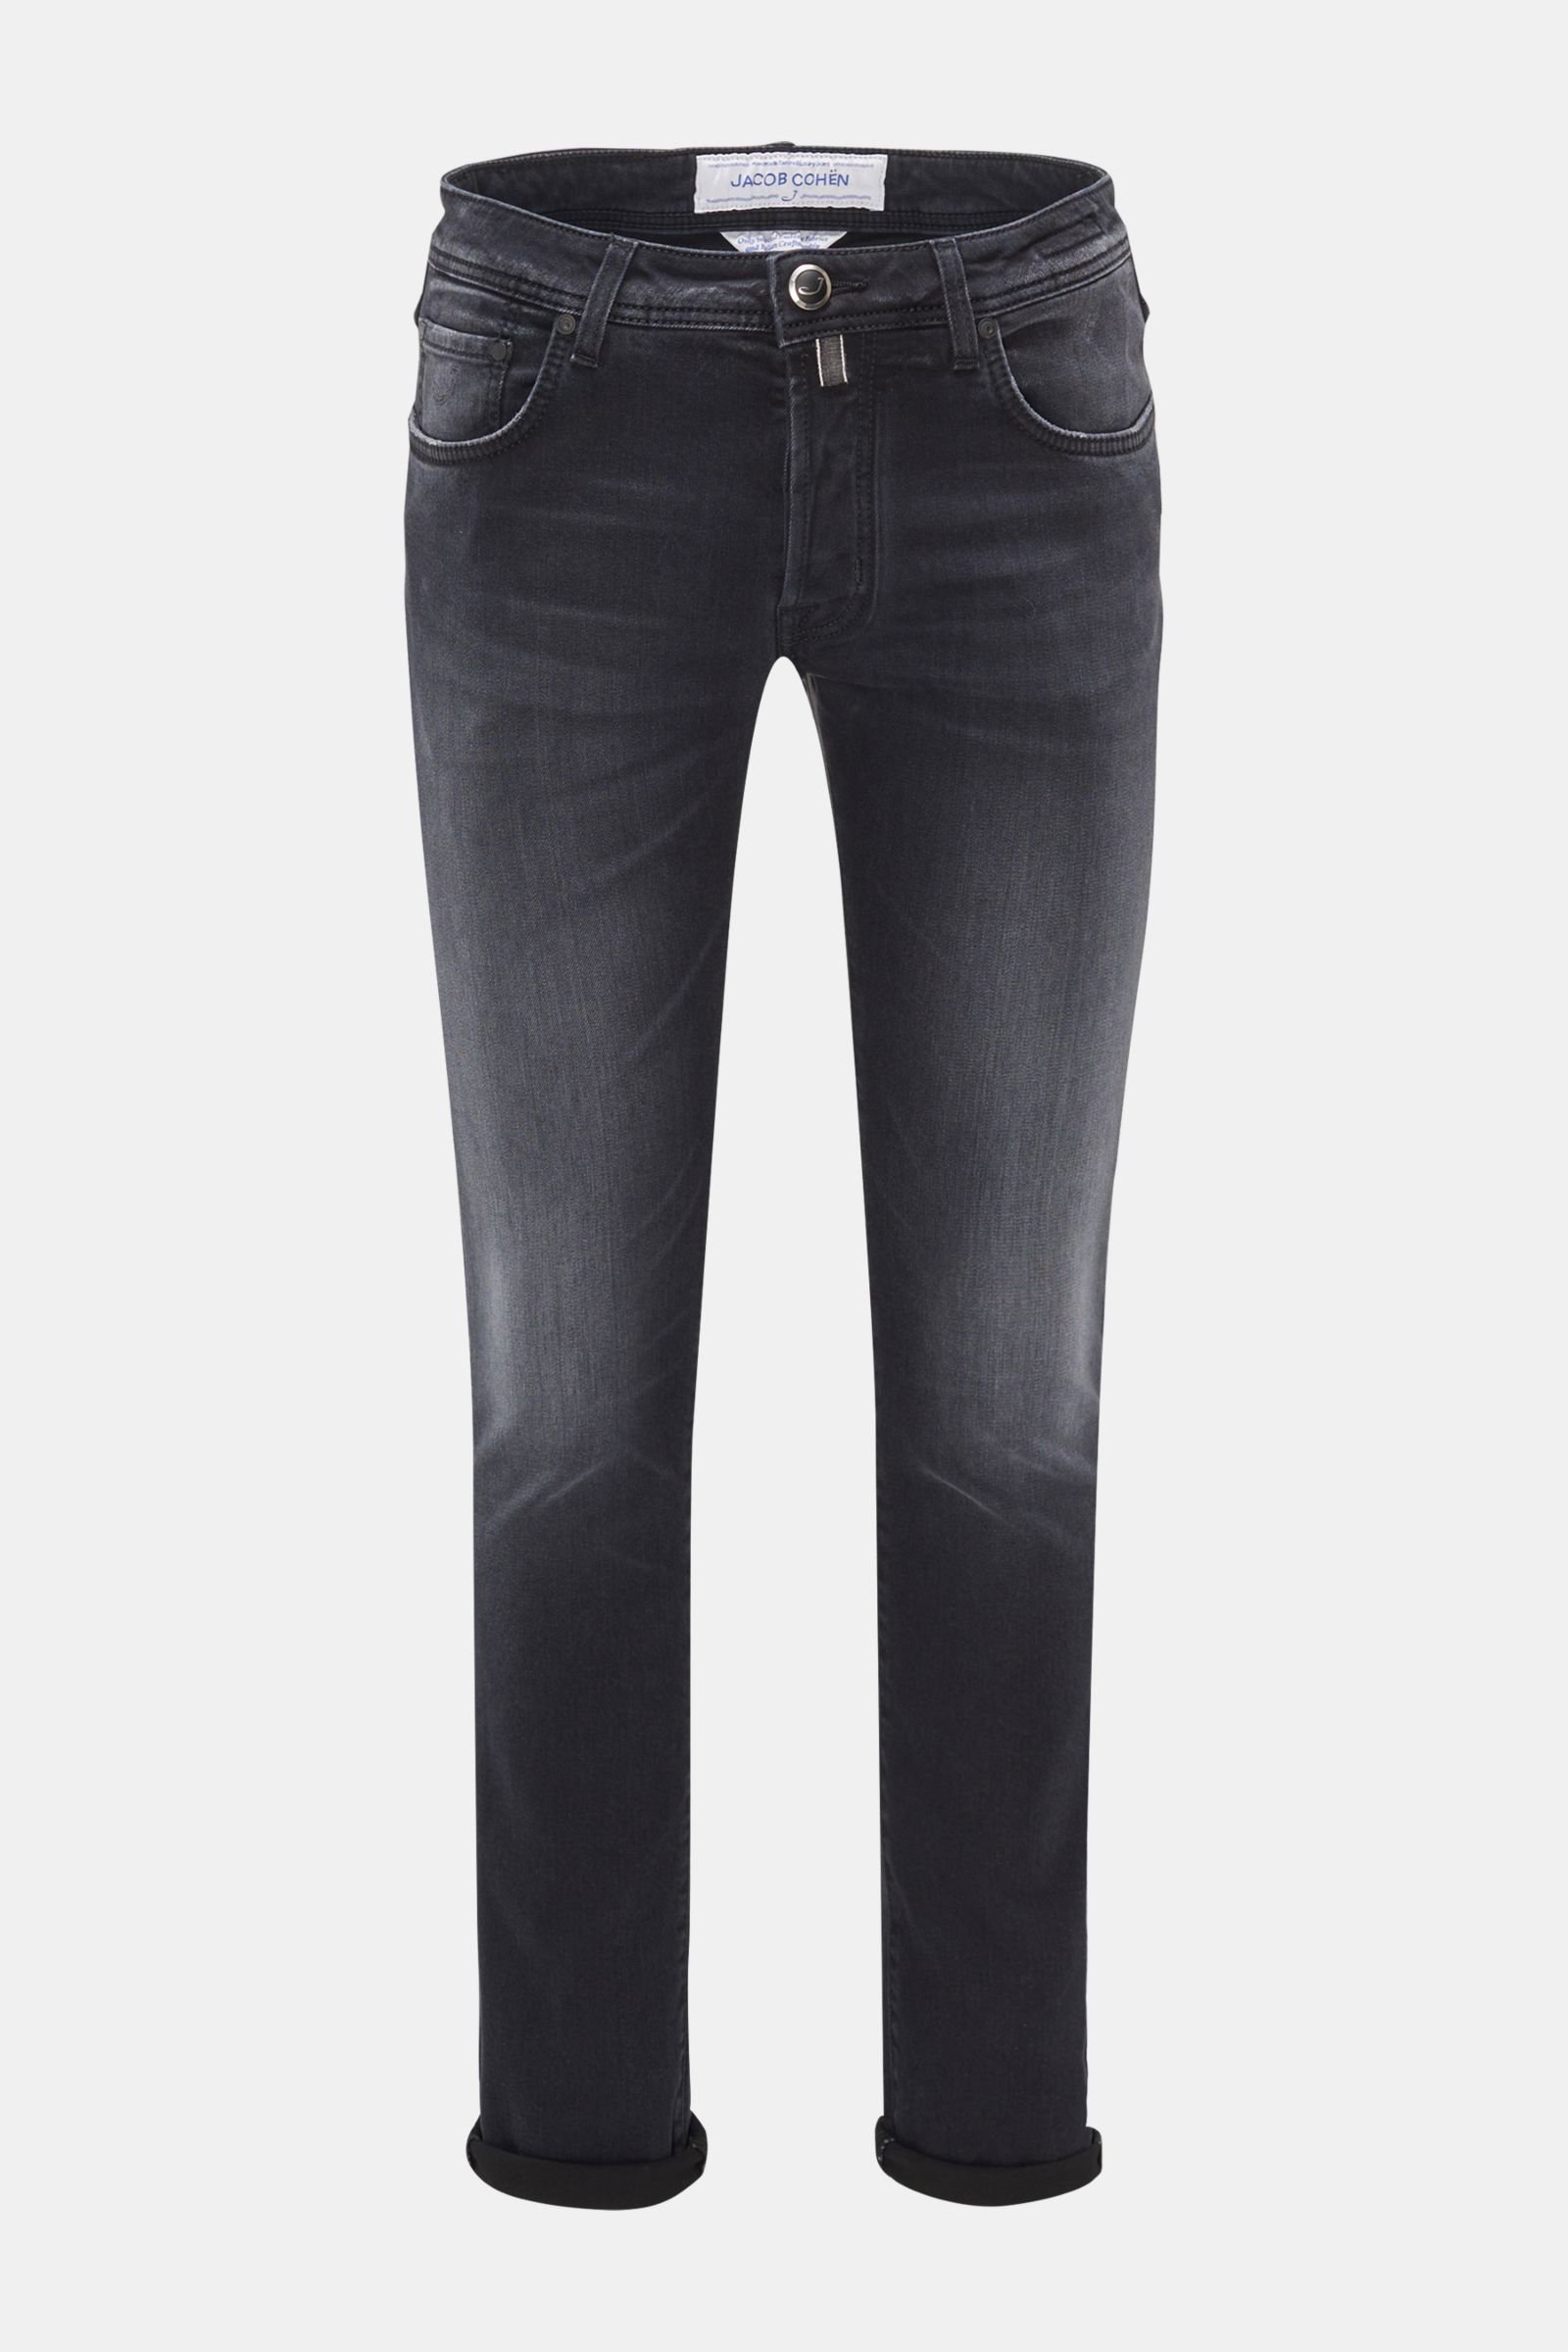 Jeans 'J688 Comfort Slim Fit' anthrazit